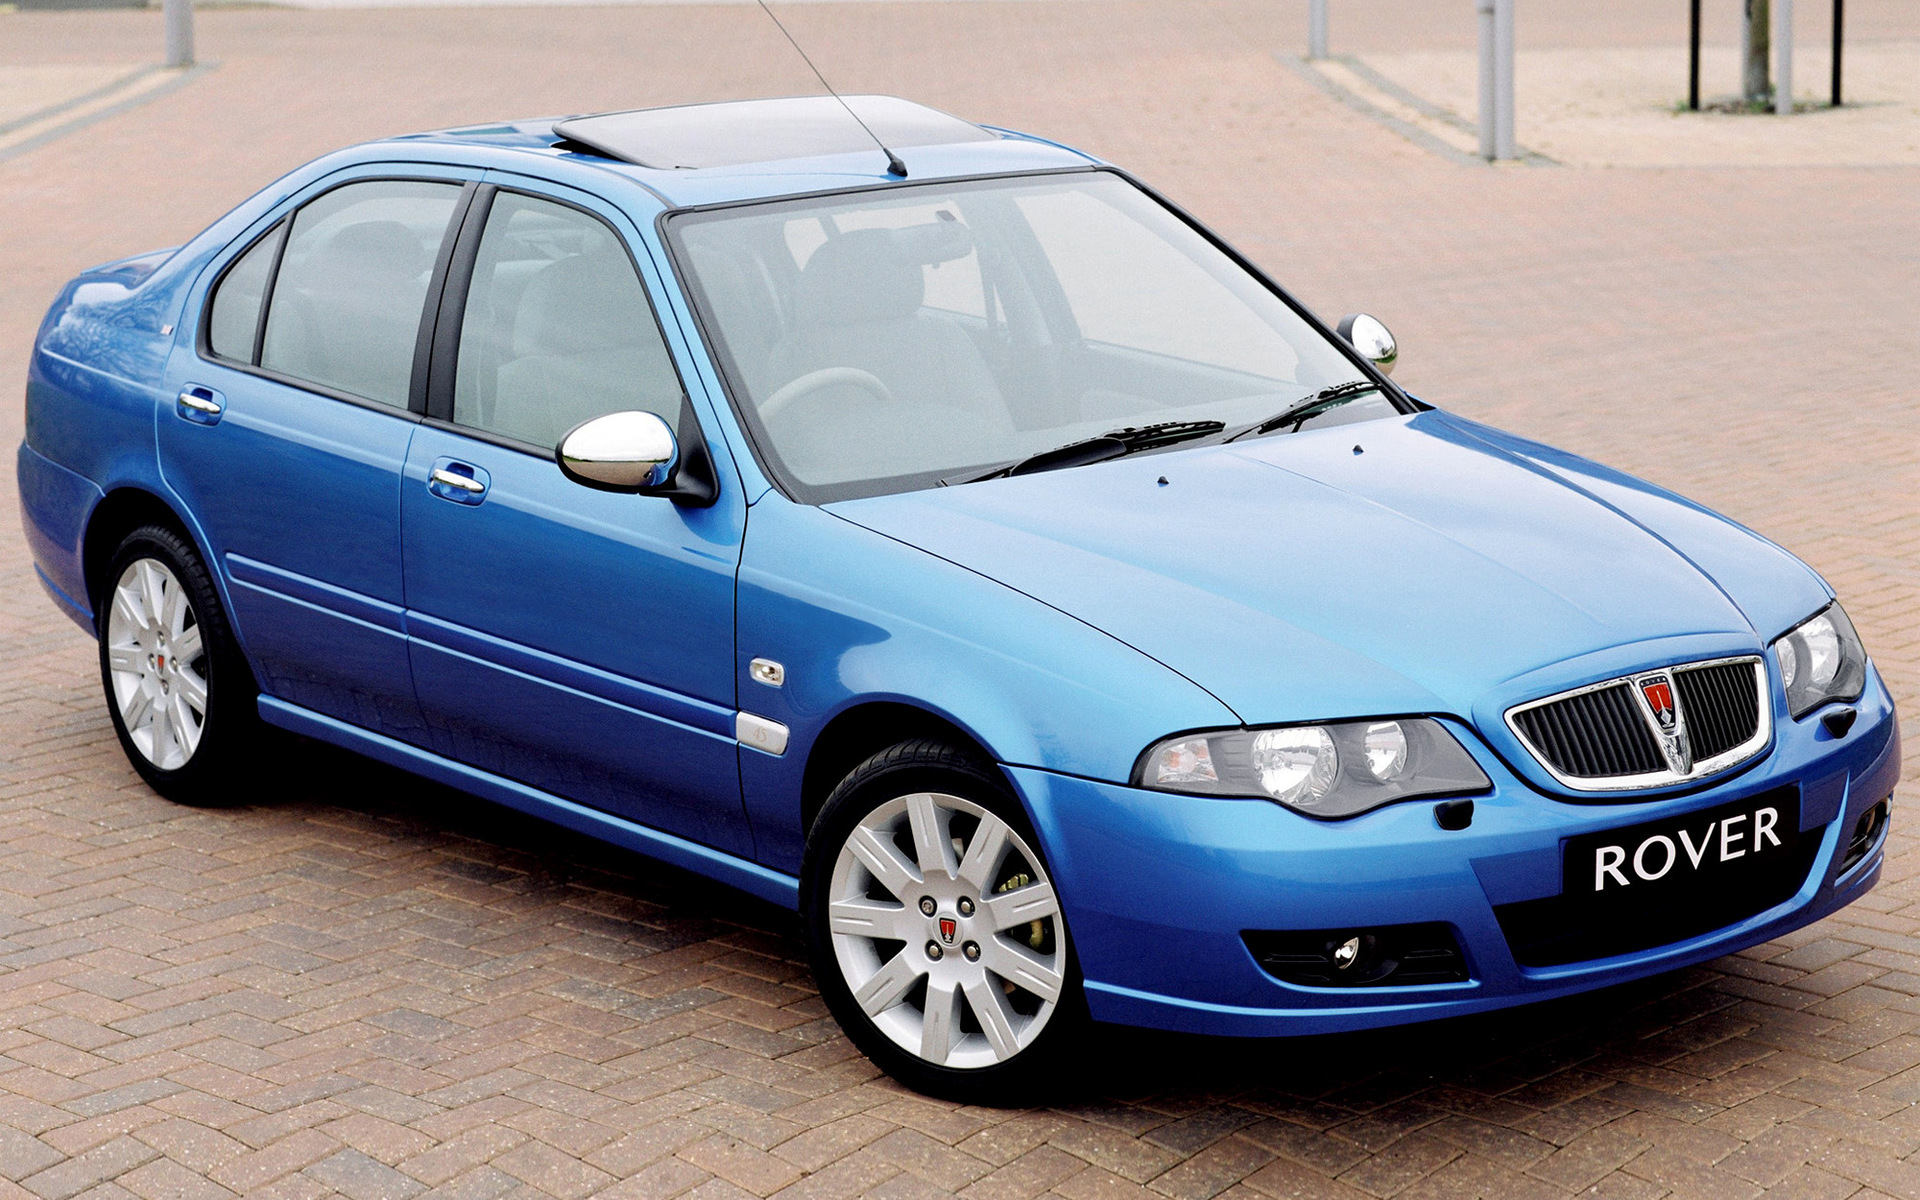 2004 Rover 45 Sedan - Wallpapers and HD Images | Car Pixel